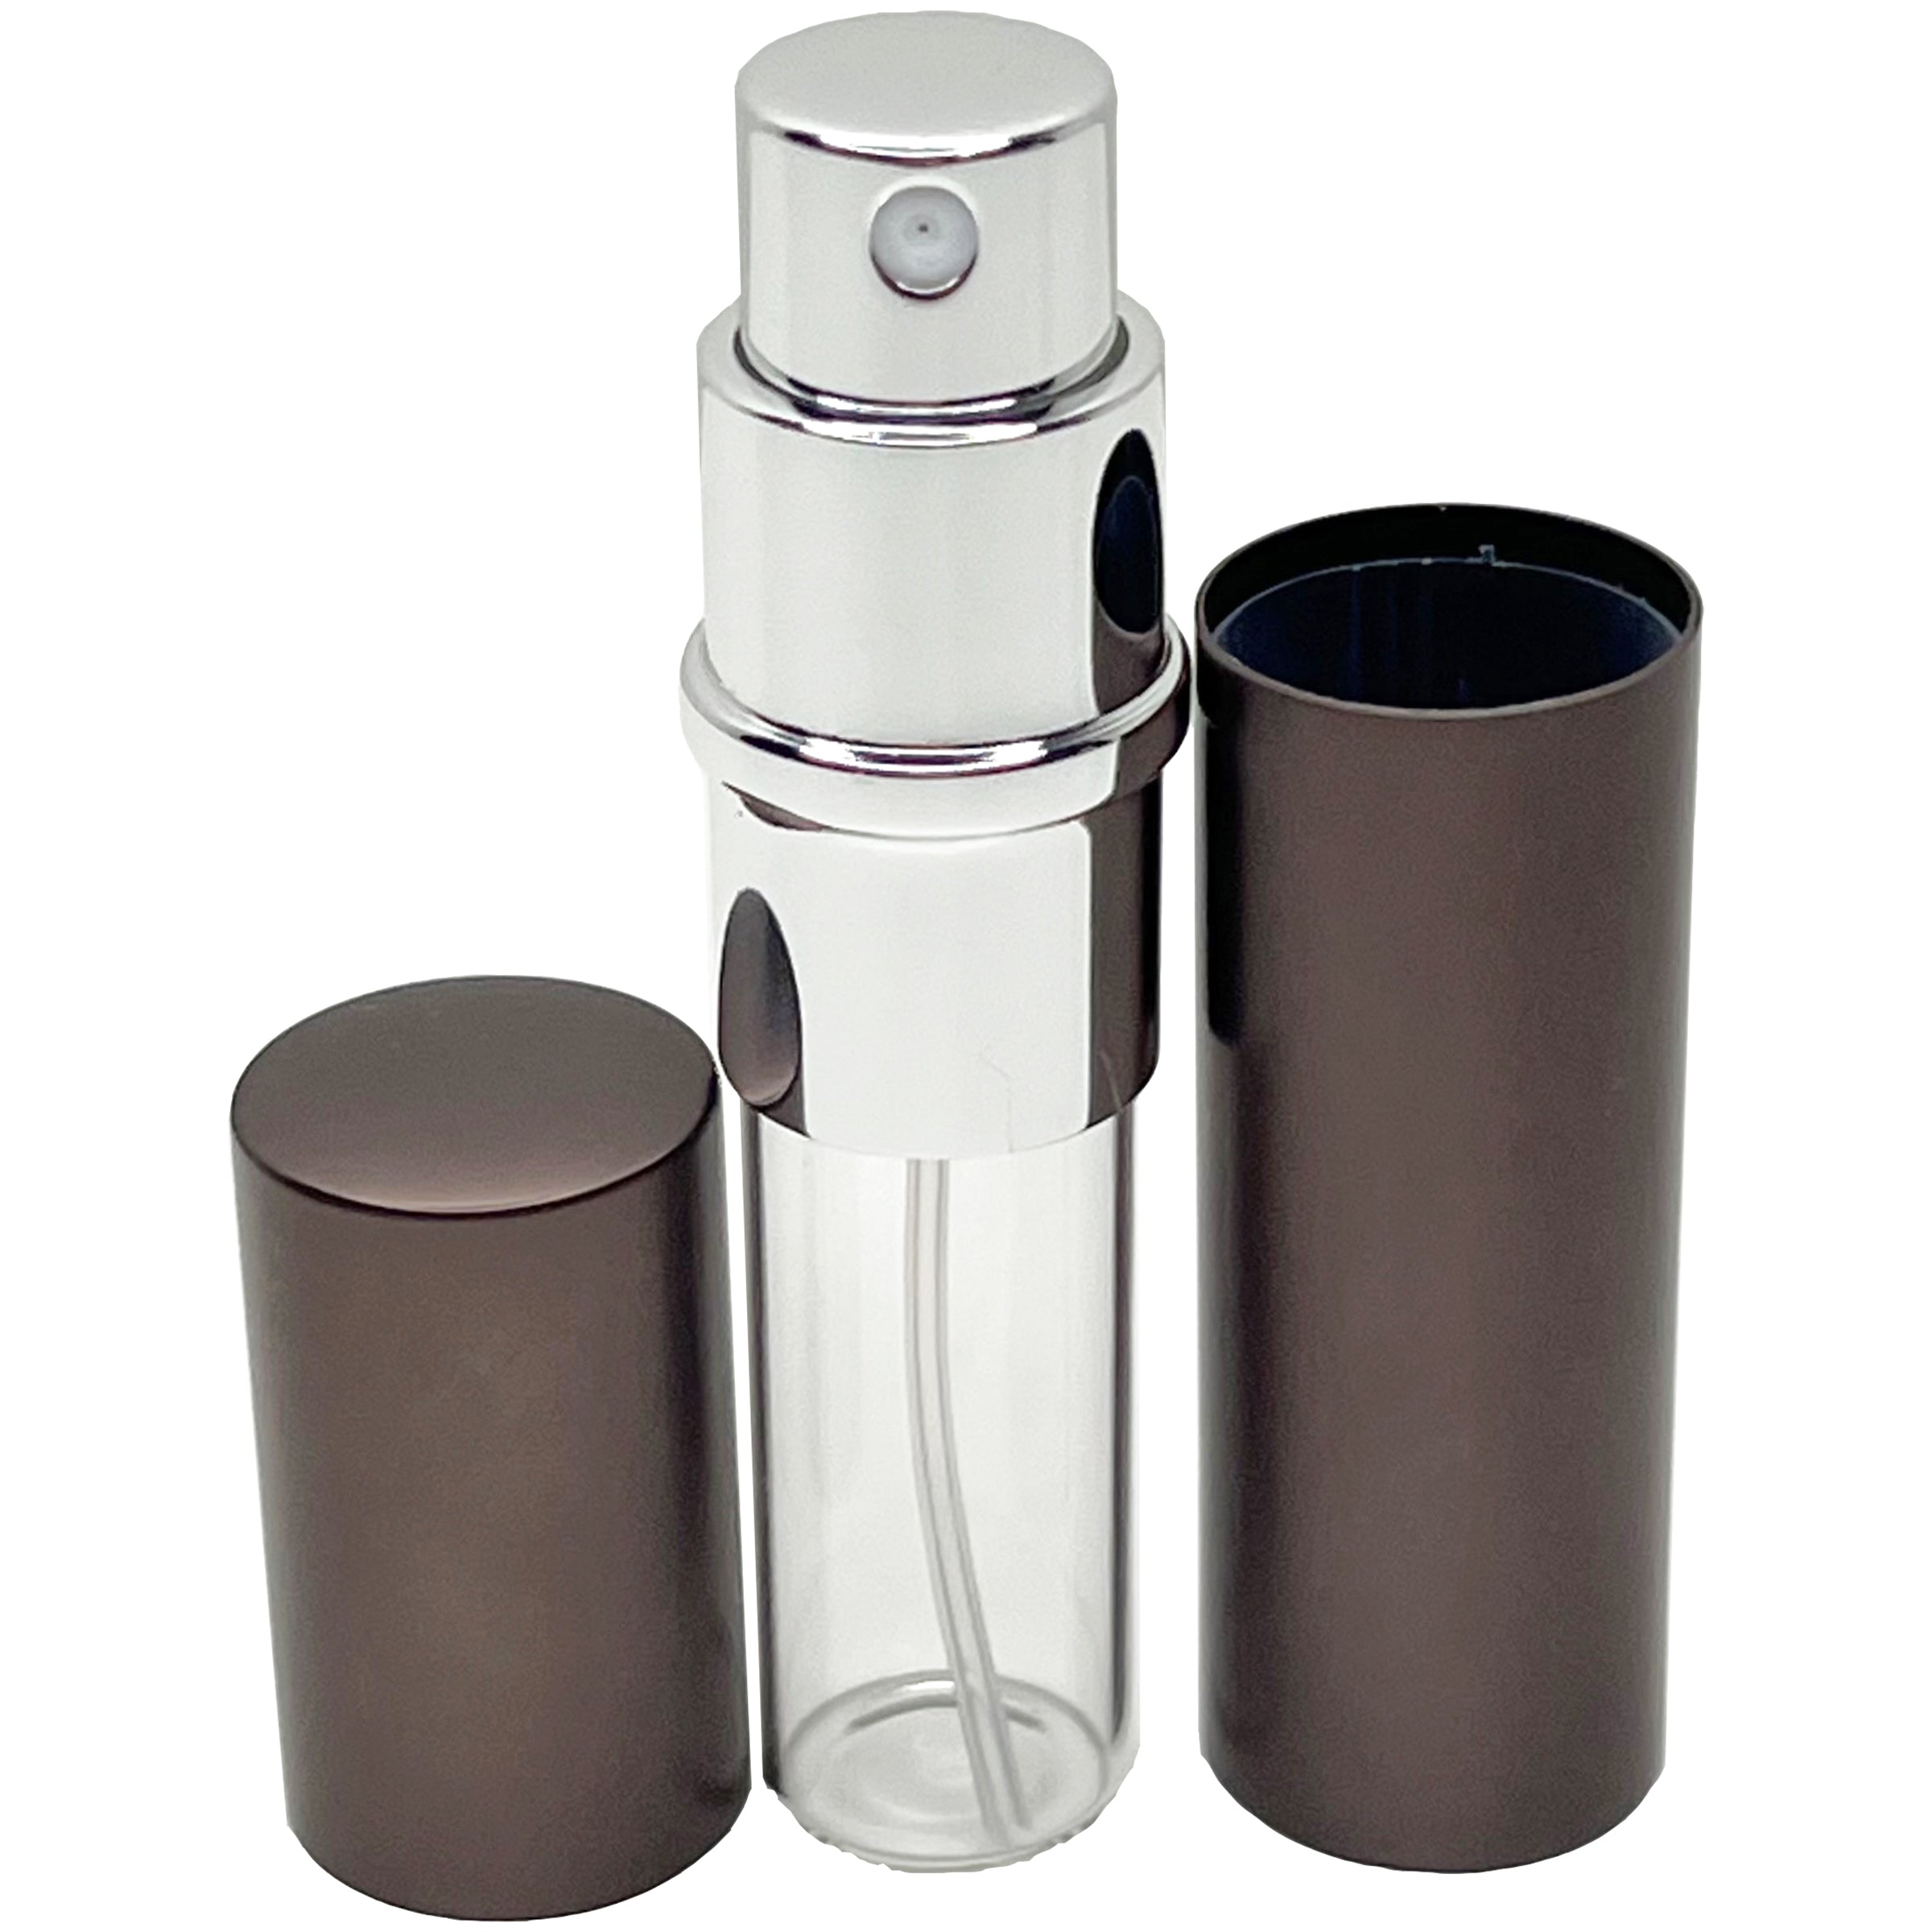 6ml 0.2oz perfume glass spray bottles aluminum shell coffee